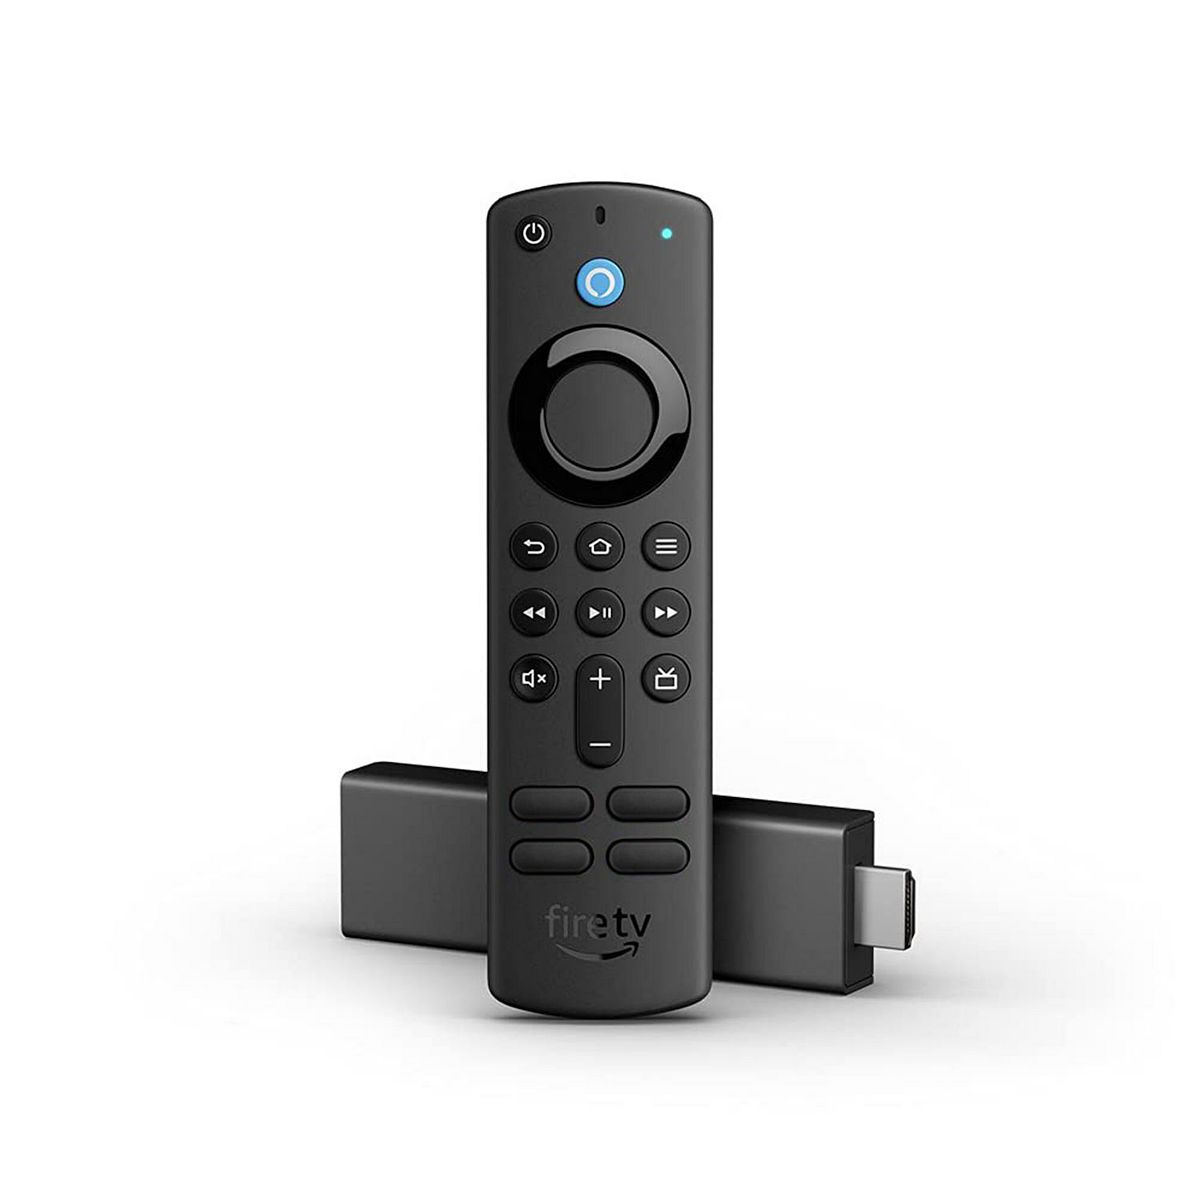 Amazon Fire TV Stick 4K with Alexa Voice Remote (includes TV controls)
亚马逊